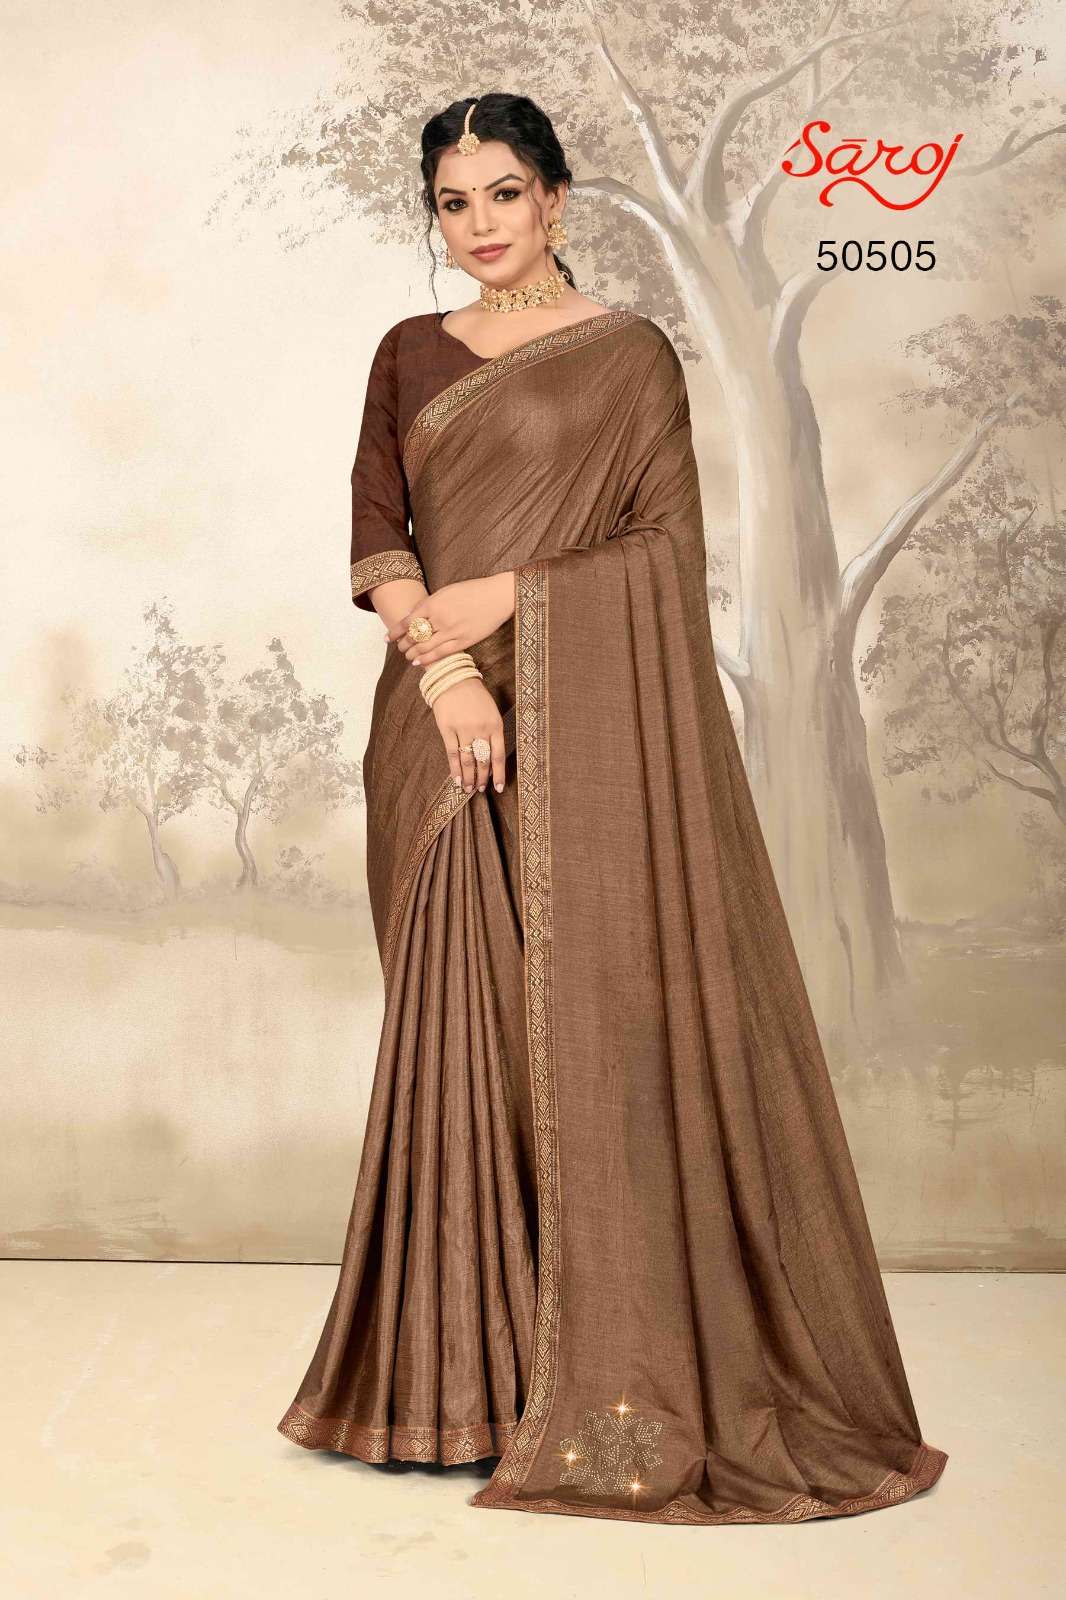 Saroj textile presents Fruit combo-2 Designer casual sarees catalogue